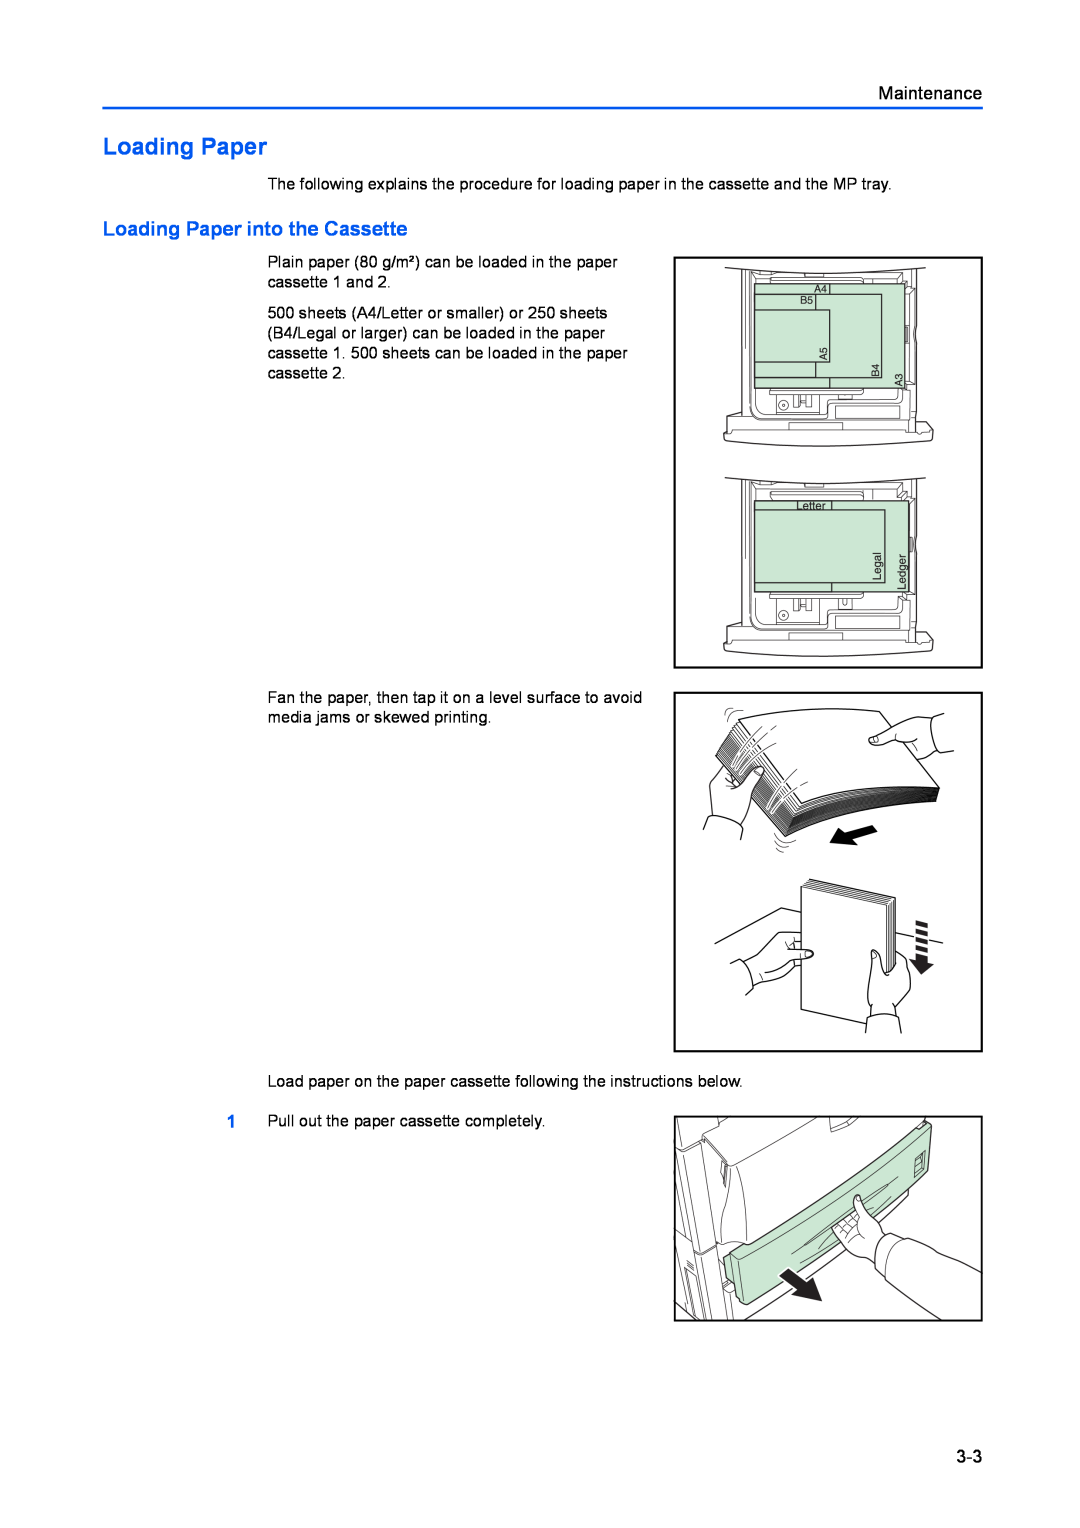 Kyocera FS-C8100DN manual Loading Paper into the Cassette, Maintenance 